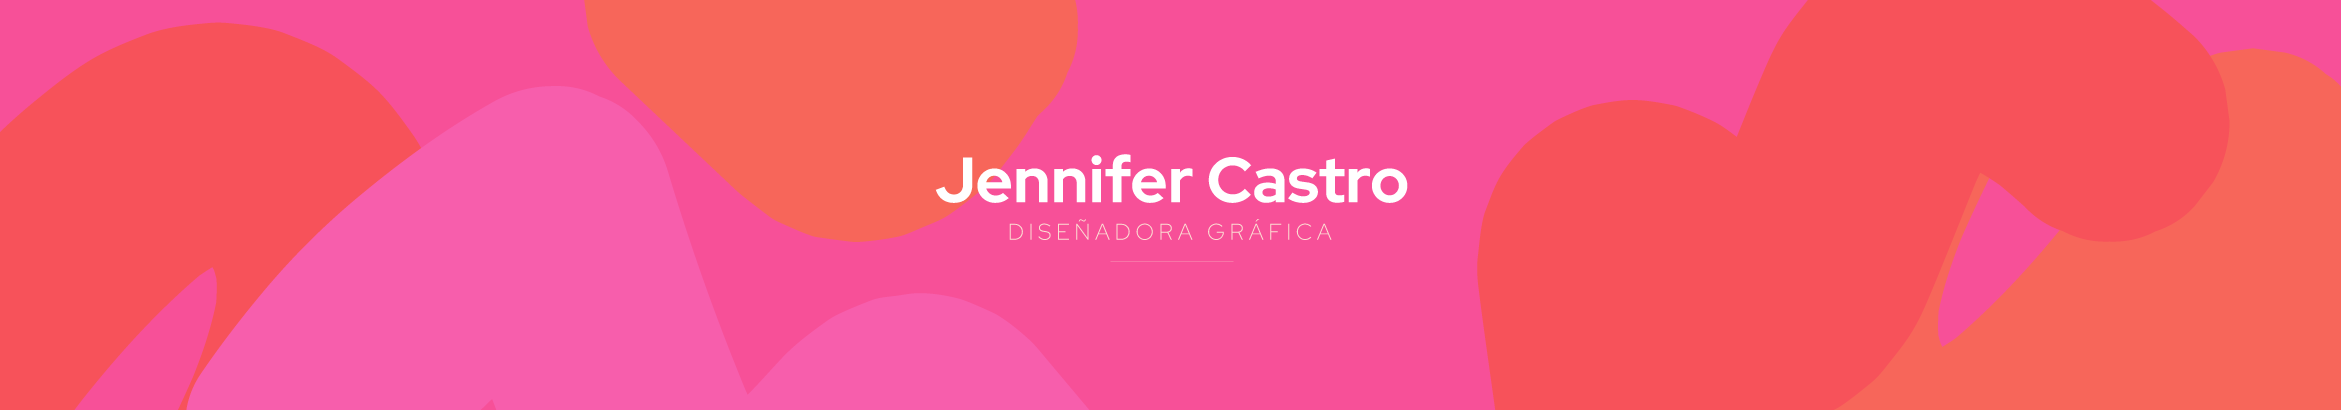 Banner de perfil de Jennifer Castro